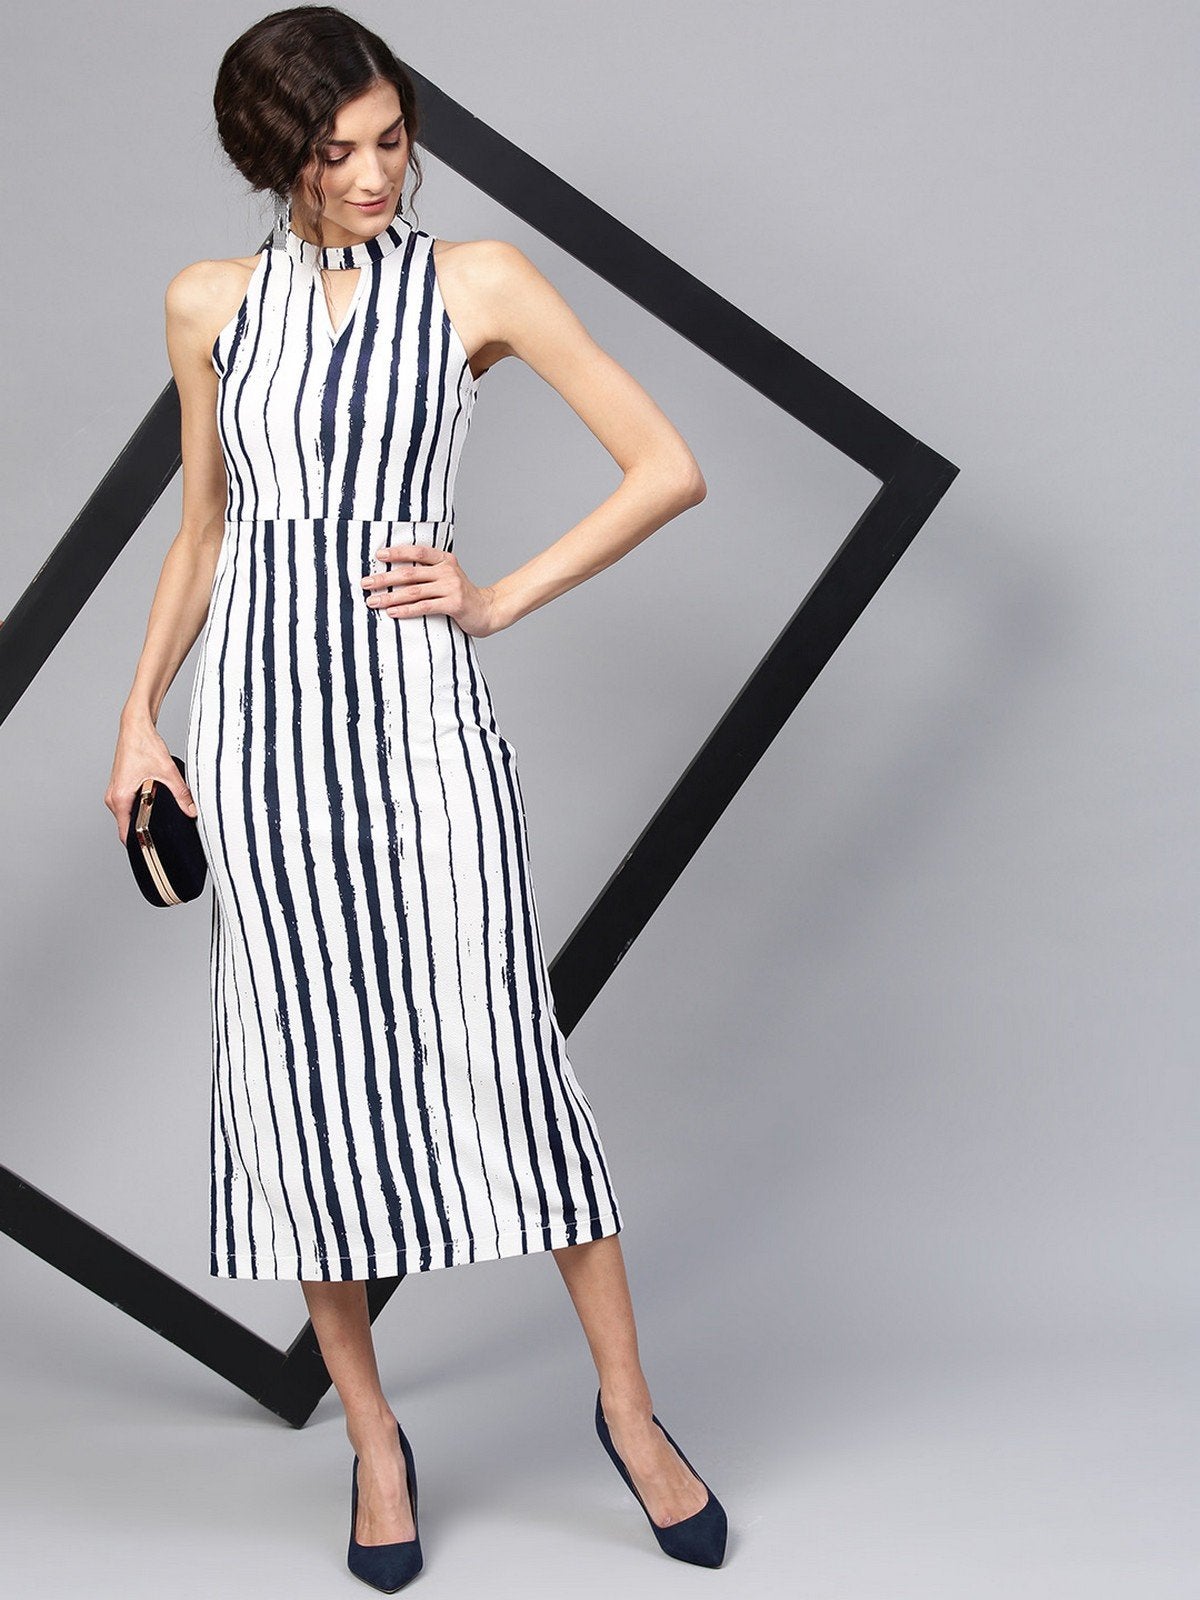 Women's Abstract Stripes Midi Dress - Pannkh